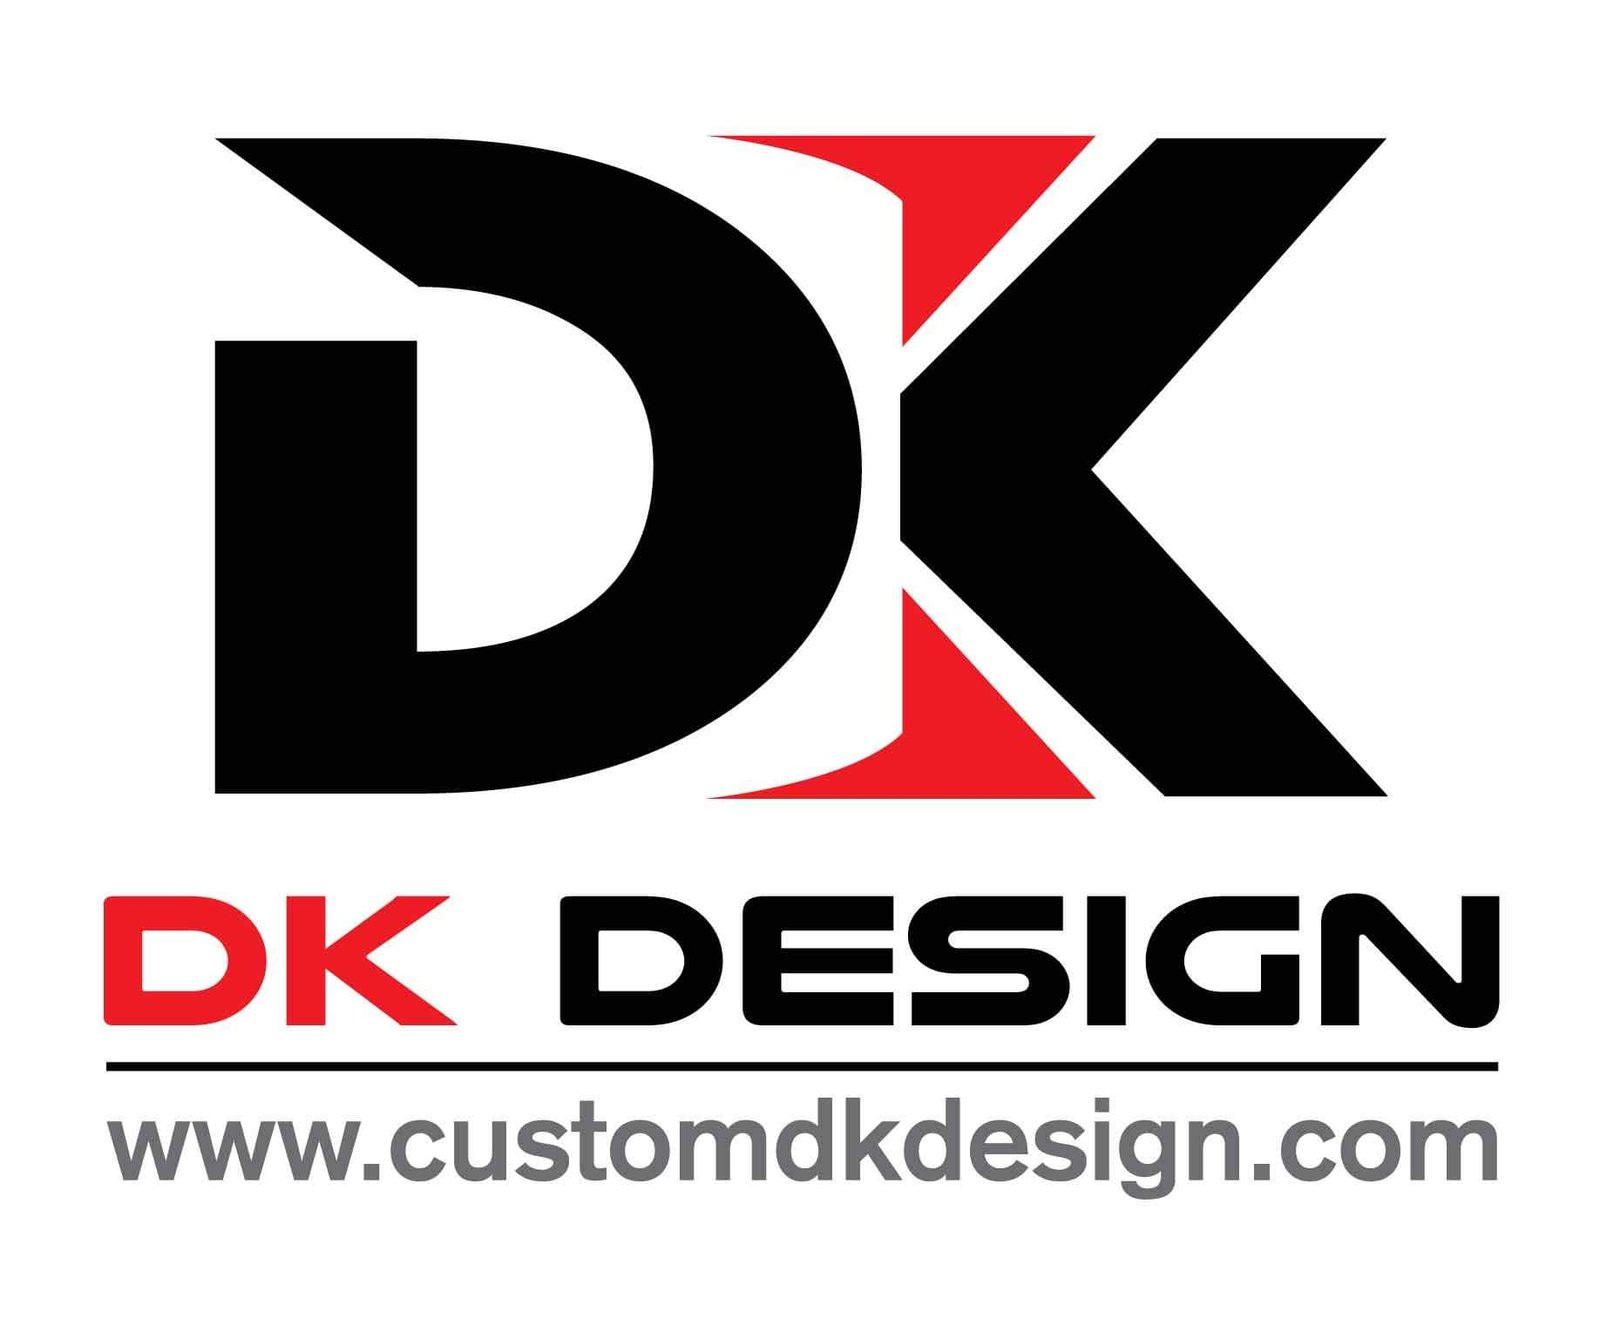 CustomDkdesign